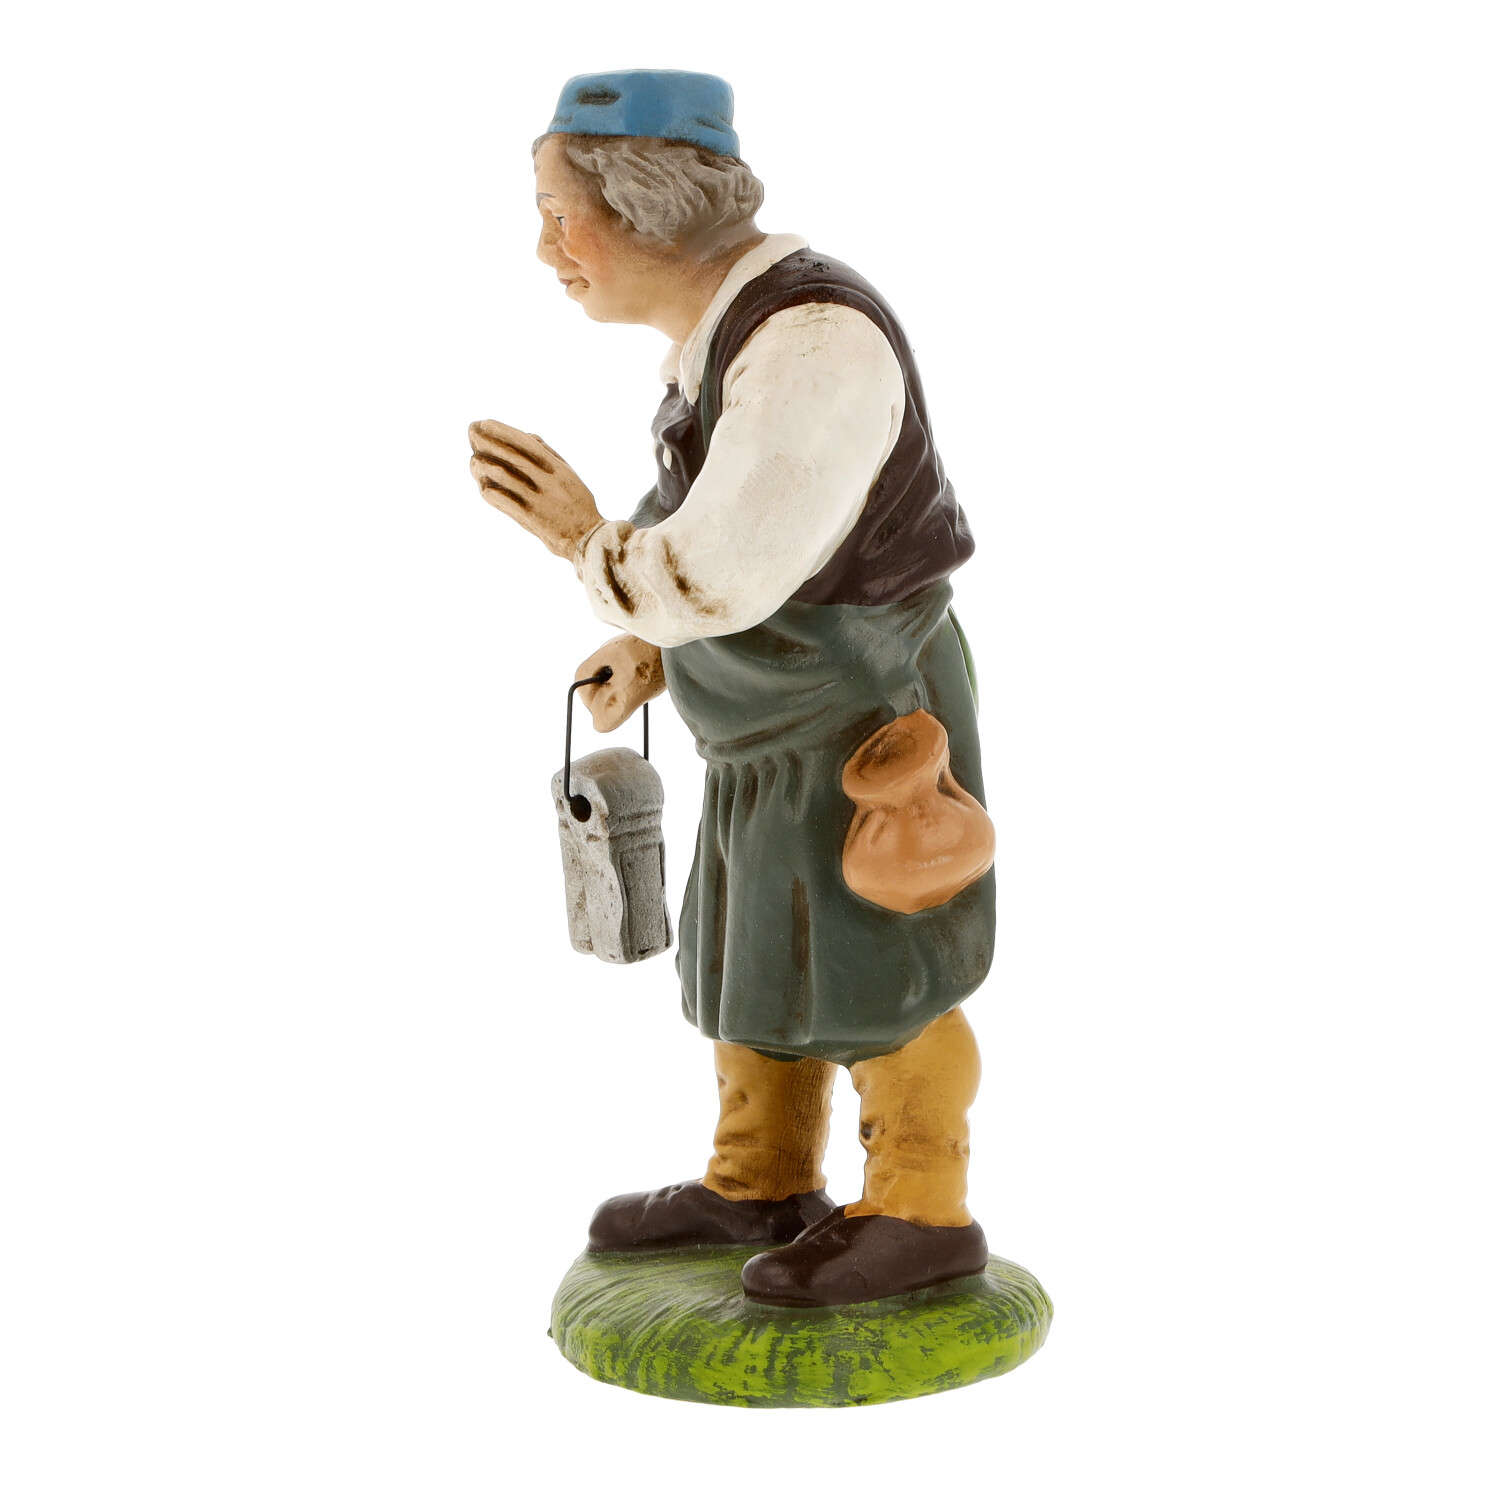 Landlord with lantern - Marolin Nativity figure - made in Germany